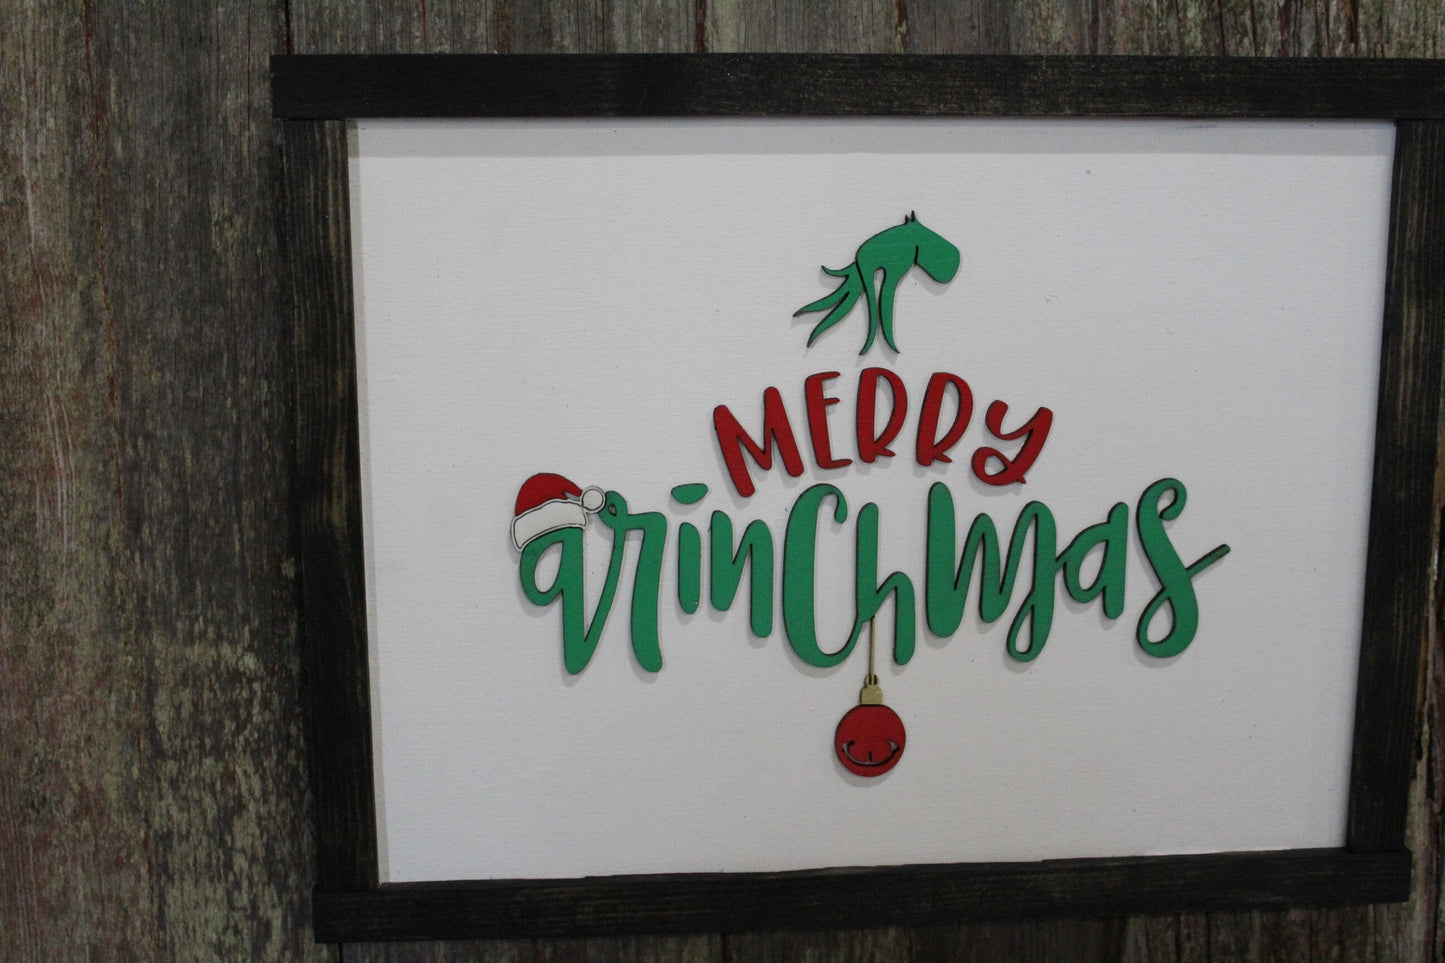 Merry Grouch mas Sign Raised 3D Wood The Mean One Christmas Décor Decoration Wall Art Farmhouse Rustic Primitive Fingers Smile Hand Festive